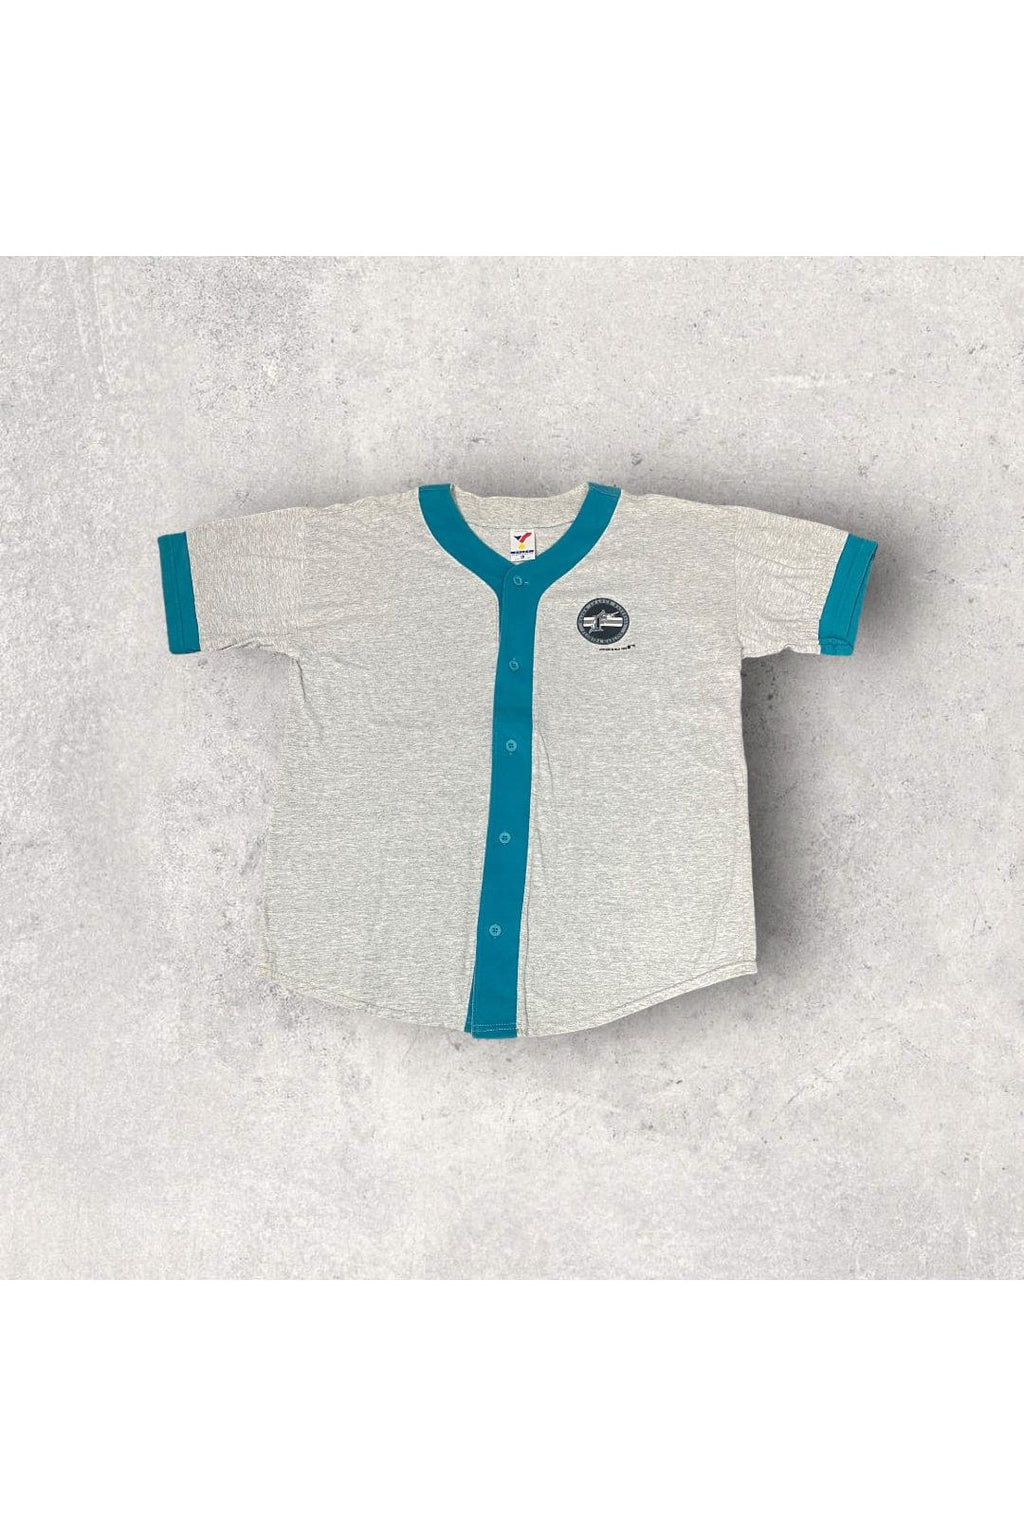 Vintage Artex Sportswear 1993 Florida Marlins Baseball Jersey- L